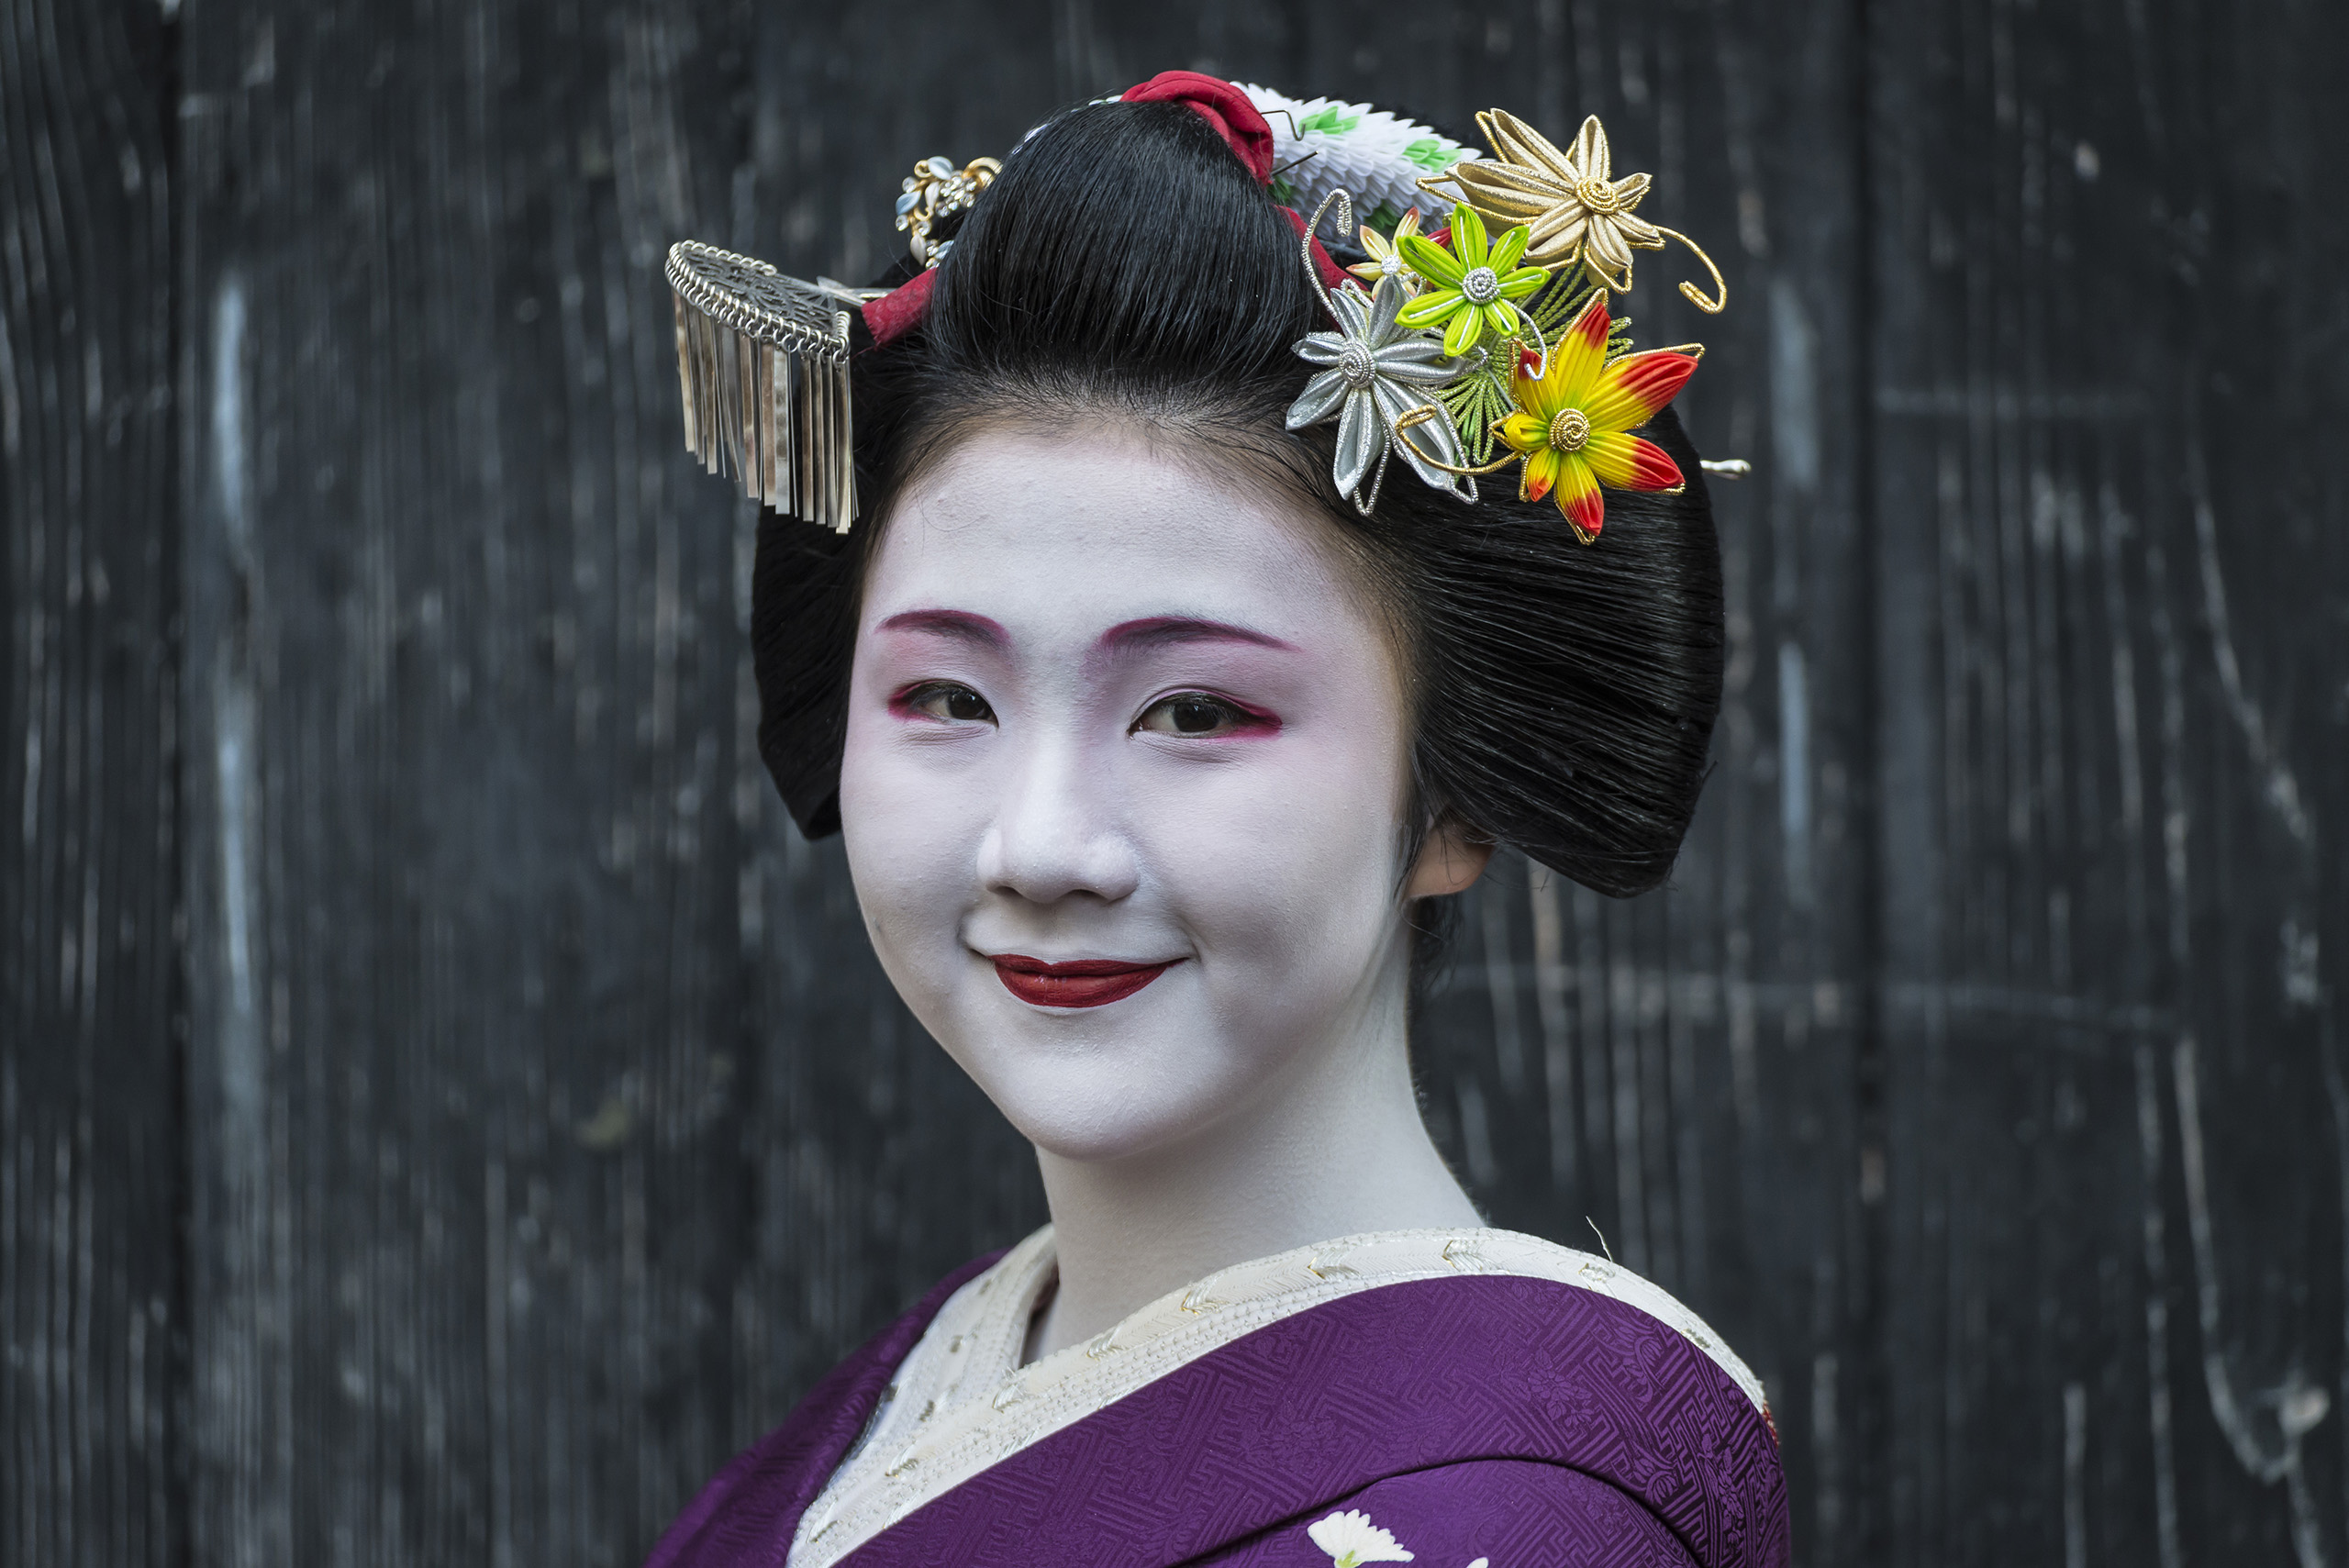 Portrait of smiling maiko